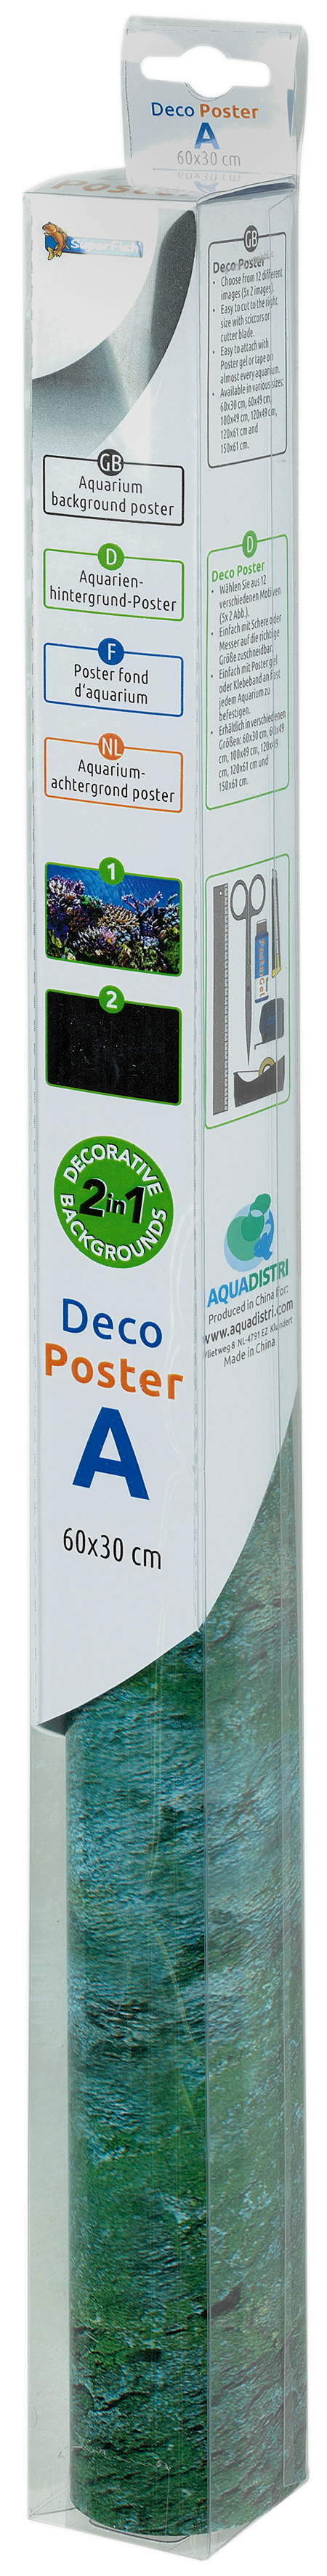 SuperFish Deco Poster D5 120x61CM